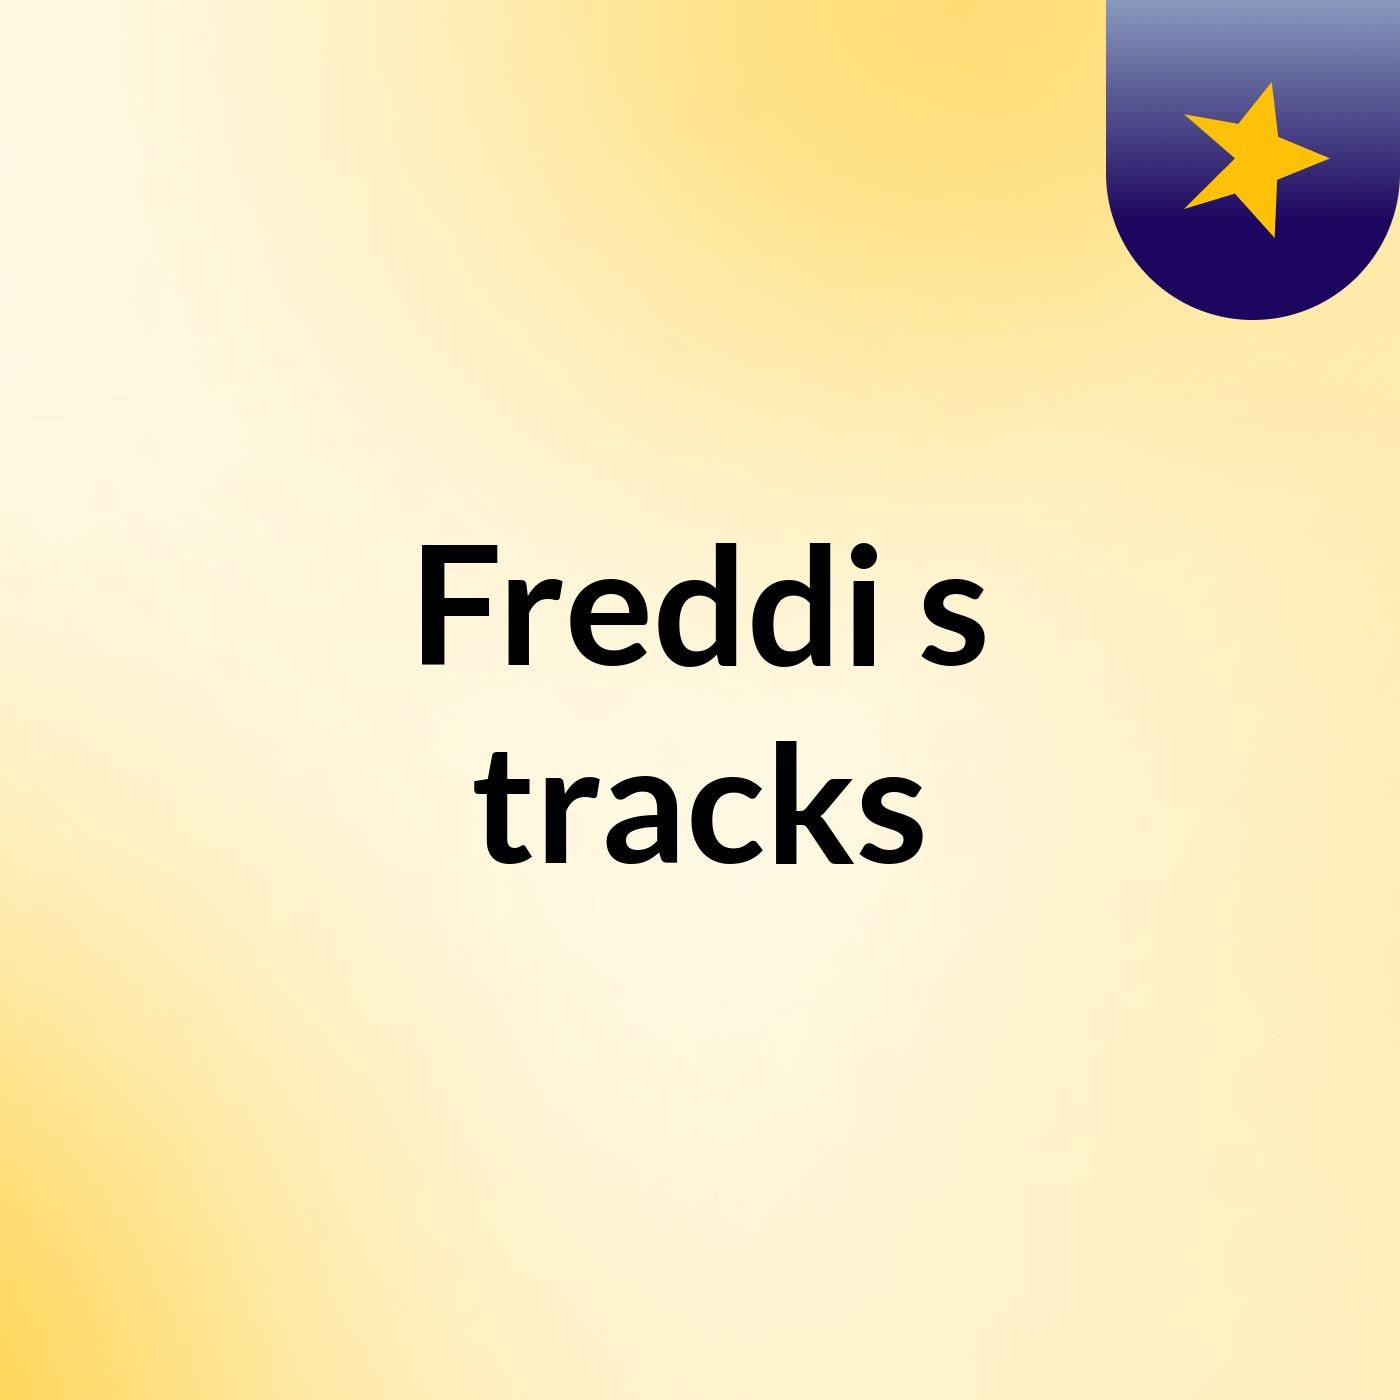 Freddi's tracks